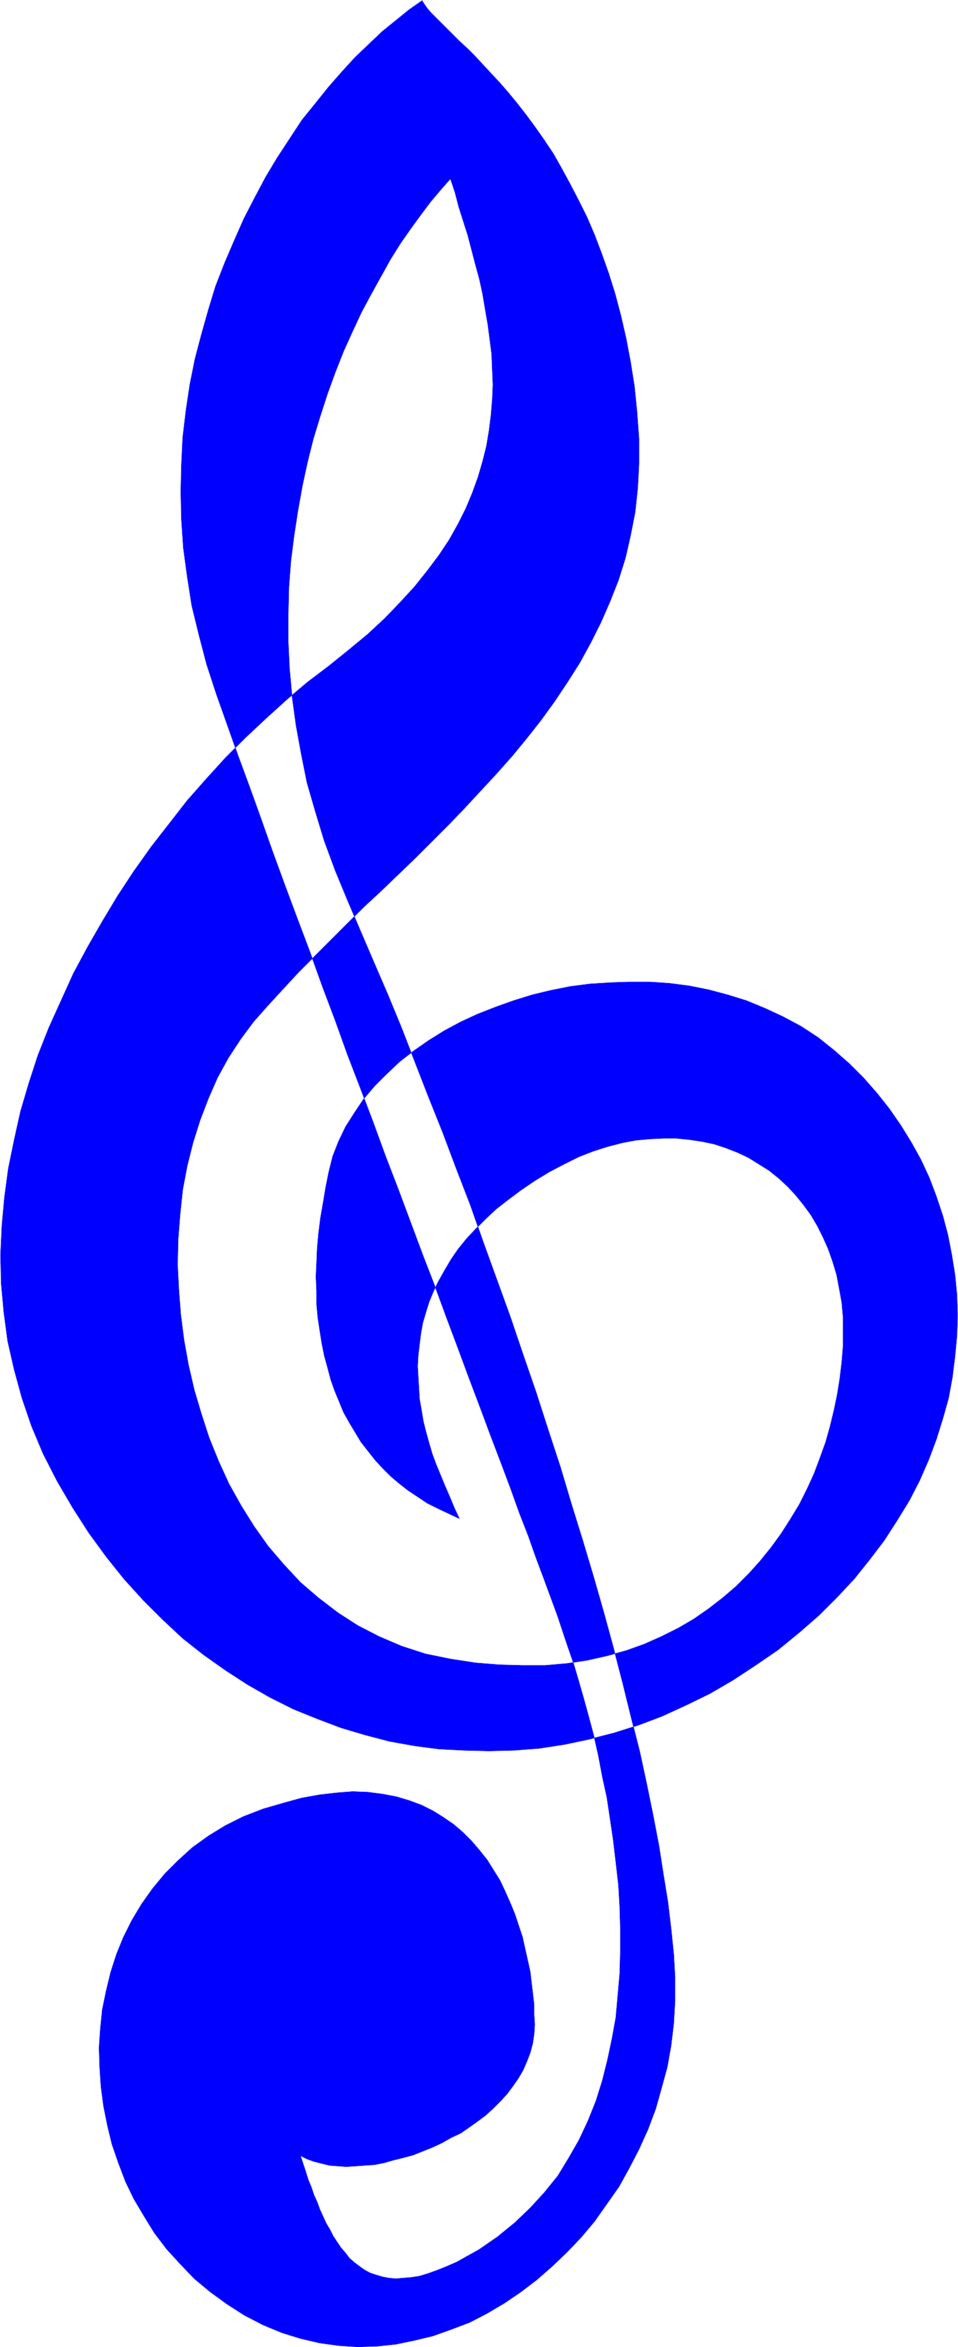 Illustration Of A Blue Treble Clef Music Symbol